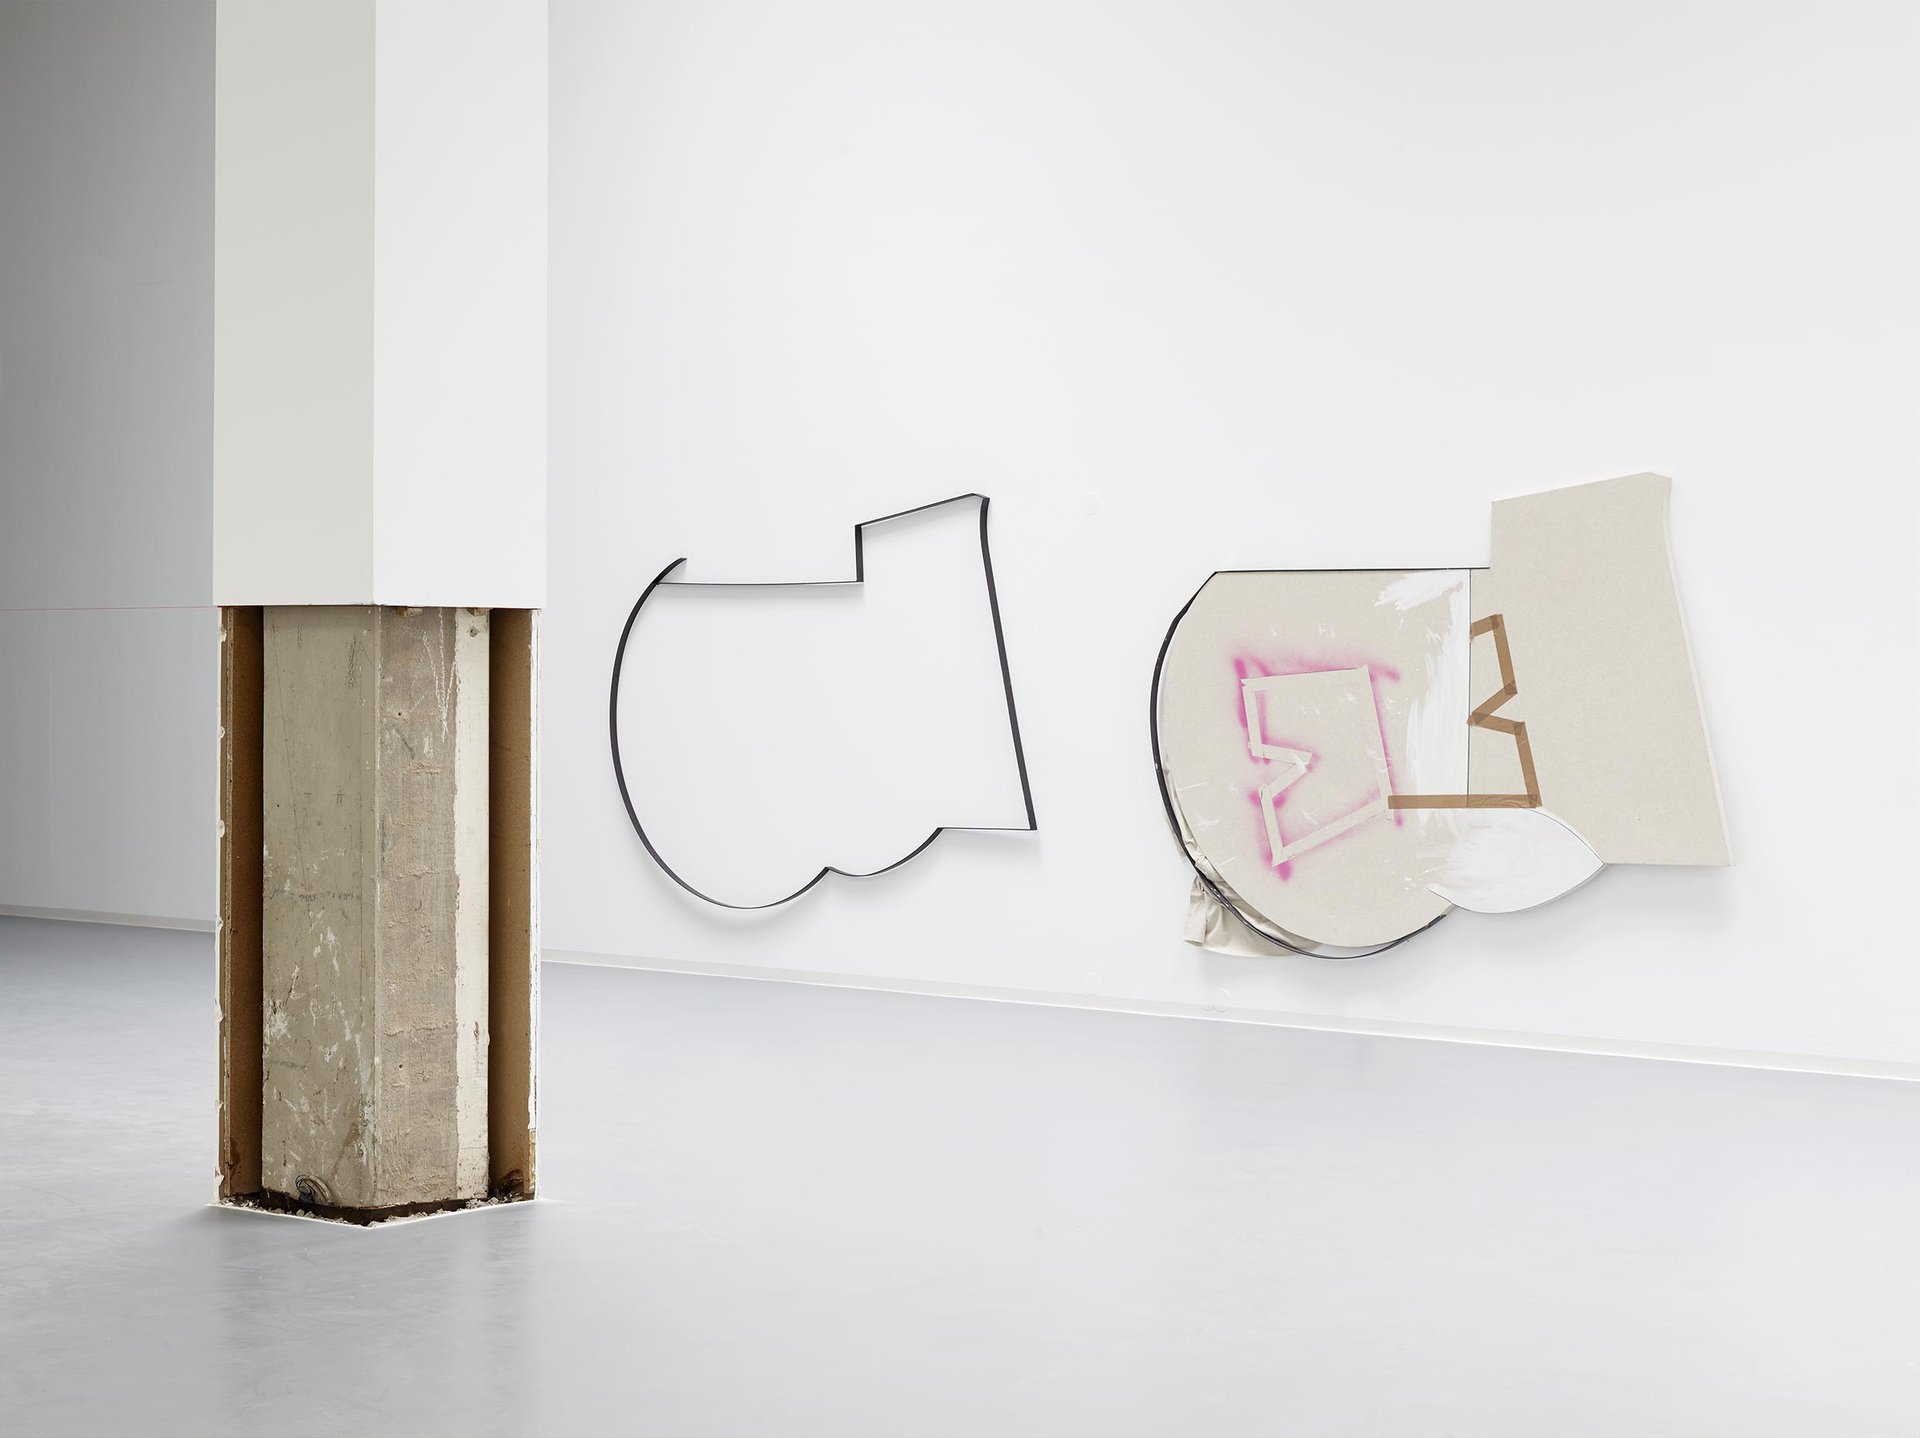 Jonathan Binet, installation view, 2015, Bonner Kunstverein. Courtesy the artist and Gaudel de Stampa, Paris. Photo: Simon Vogel